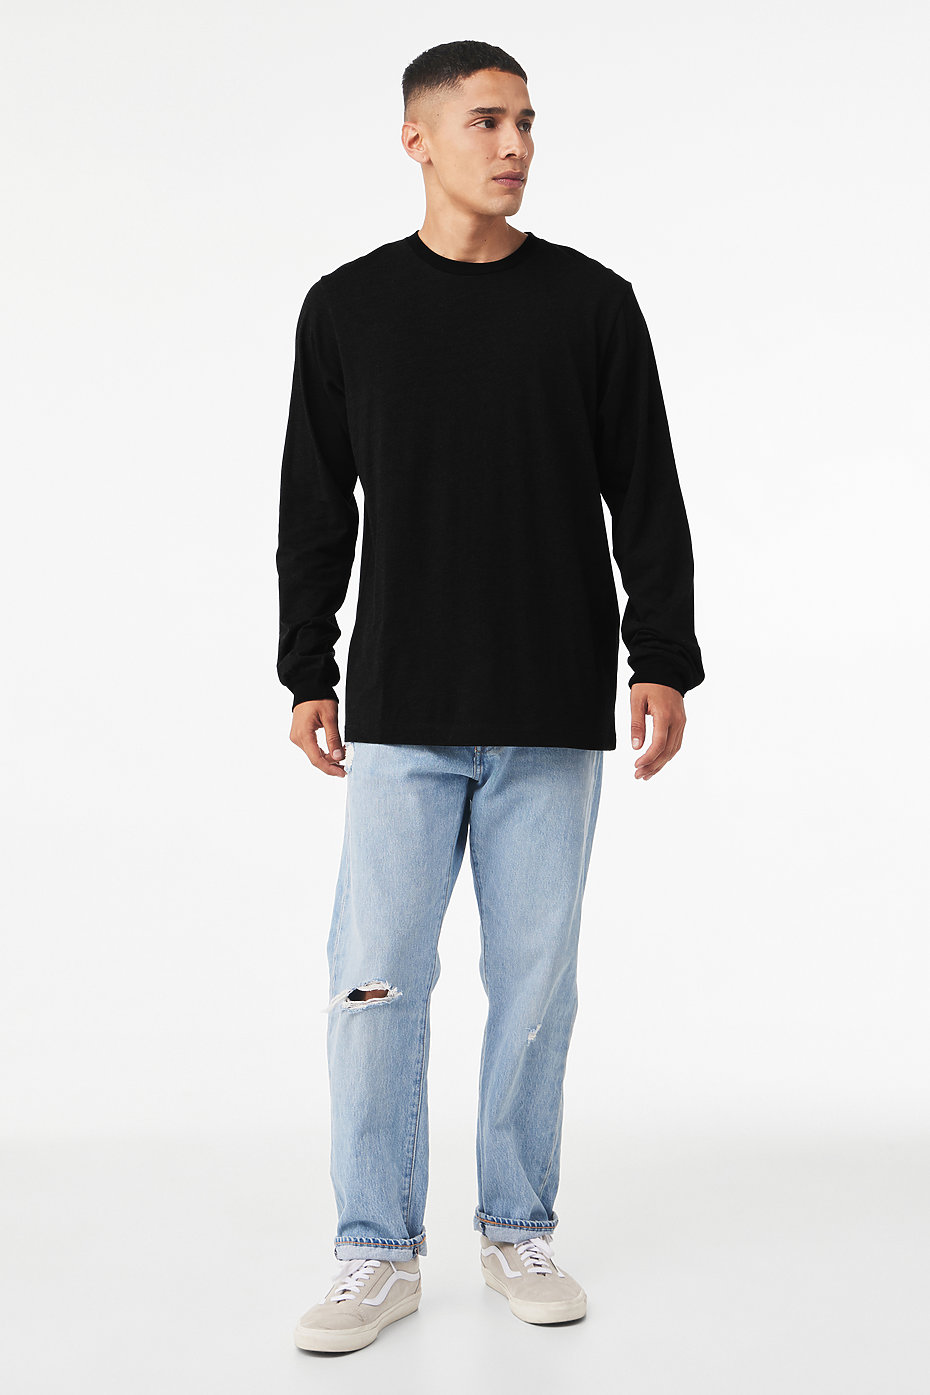 Mens Long Sleeve T Shirts | Unisex Jersey T Shirt | Wholesale Clothing ...